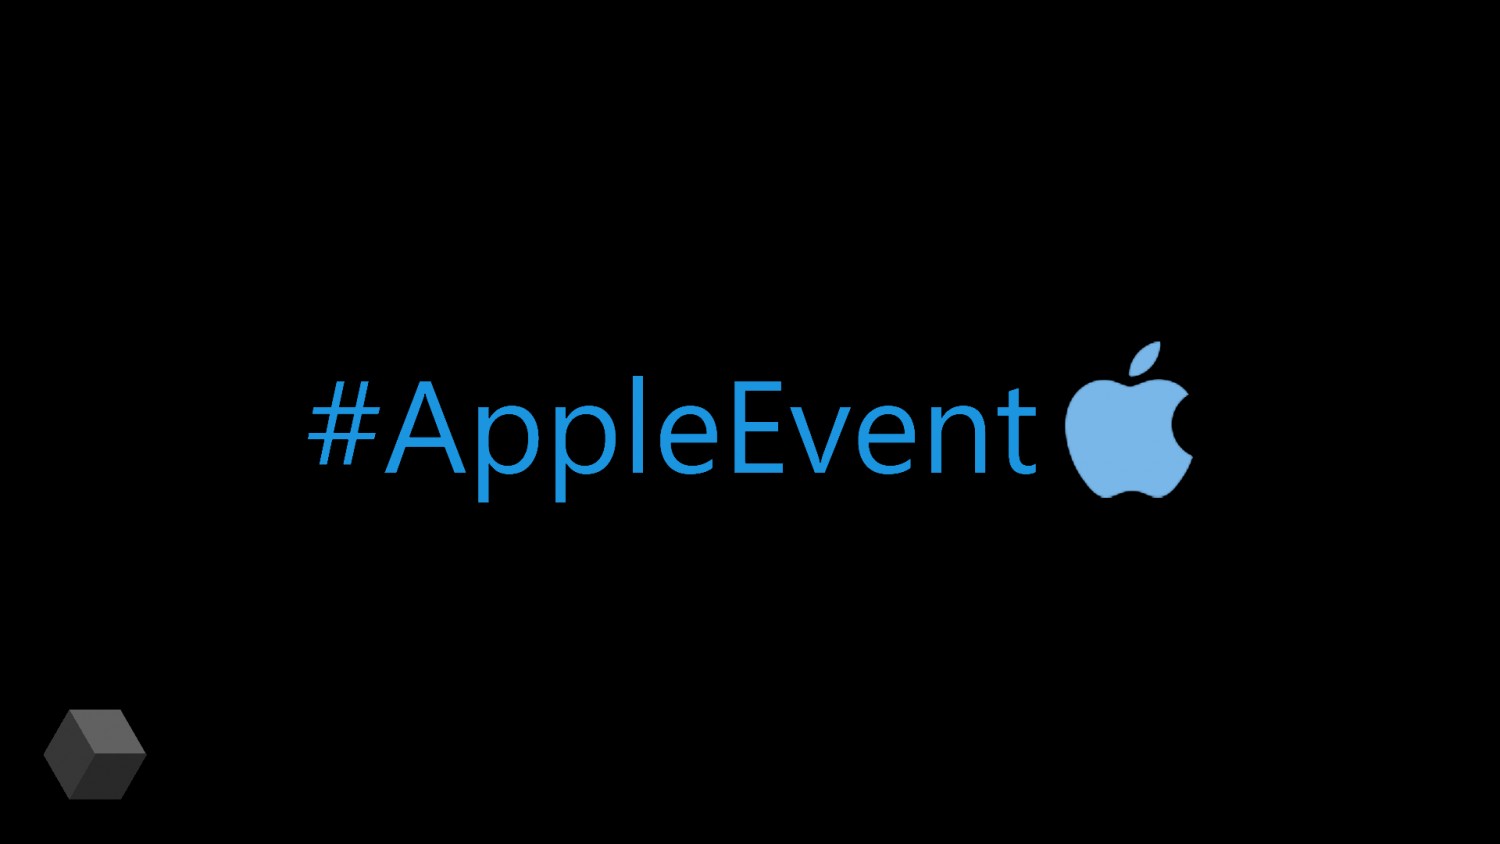 Хэштег #AppleEvent в Twitter теперь дополняется логотипом Apple